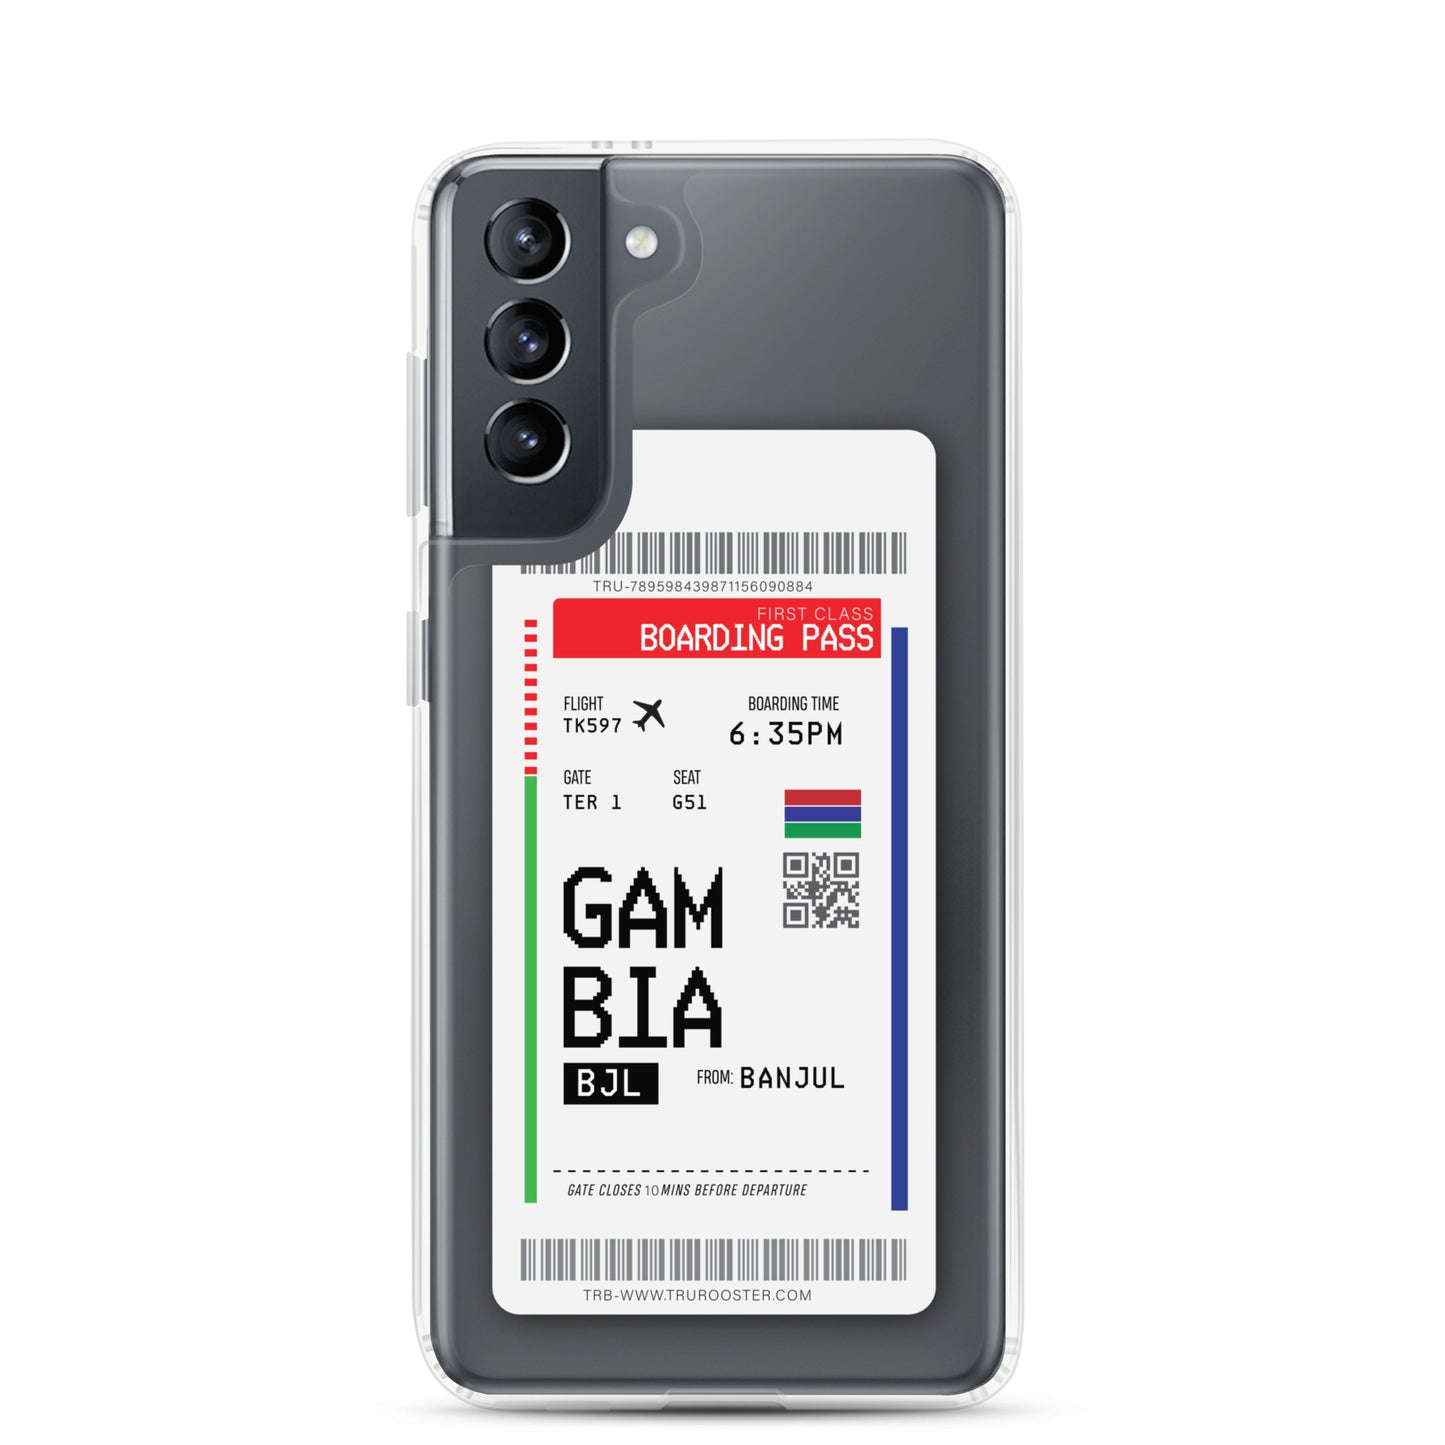 Gambia Transit Boarding pass Samsung Case